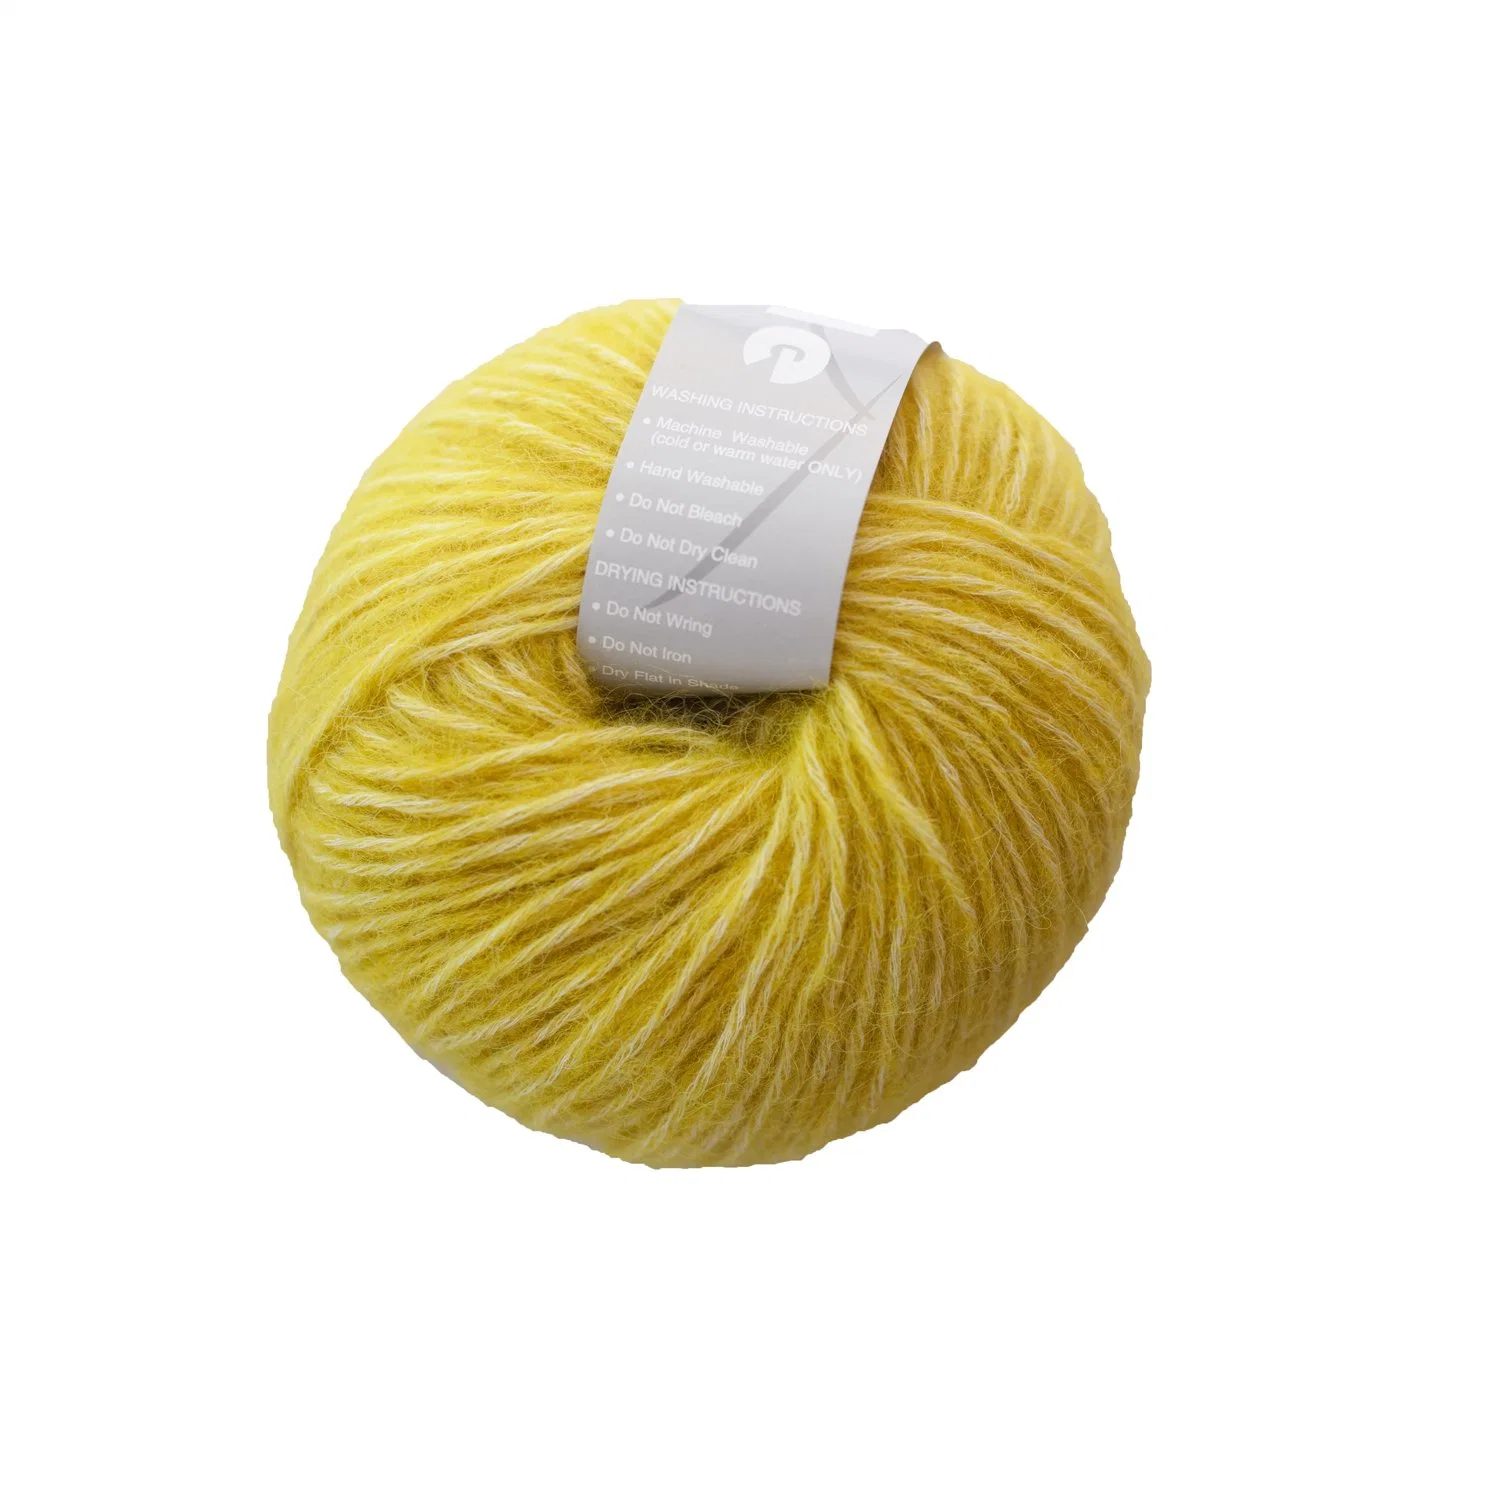 Very Soft Alpaca Air Yarn for Hand Knitting, Best Selling Knitting Yarn for Crochet Knitting